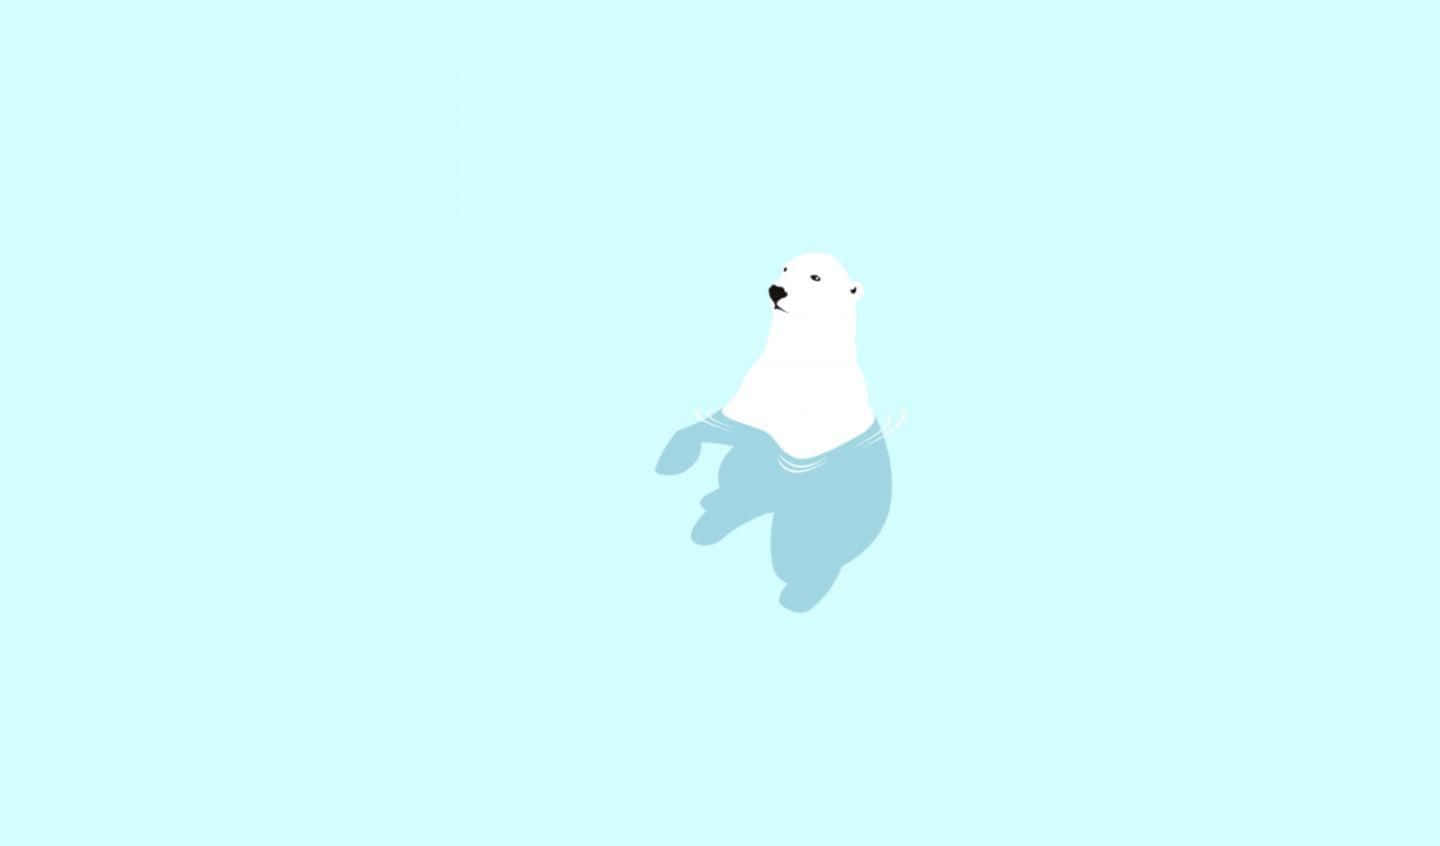 Adorableoso Polar De Dibujos Animados Descansando En El Hielo Fondo de pantalla